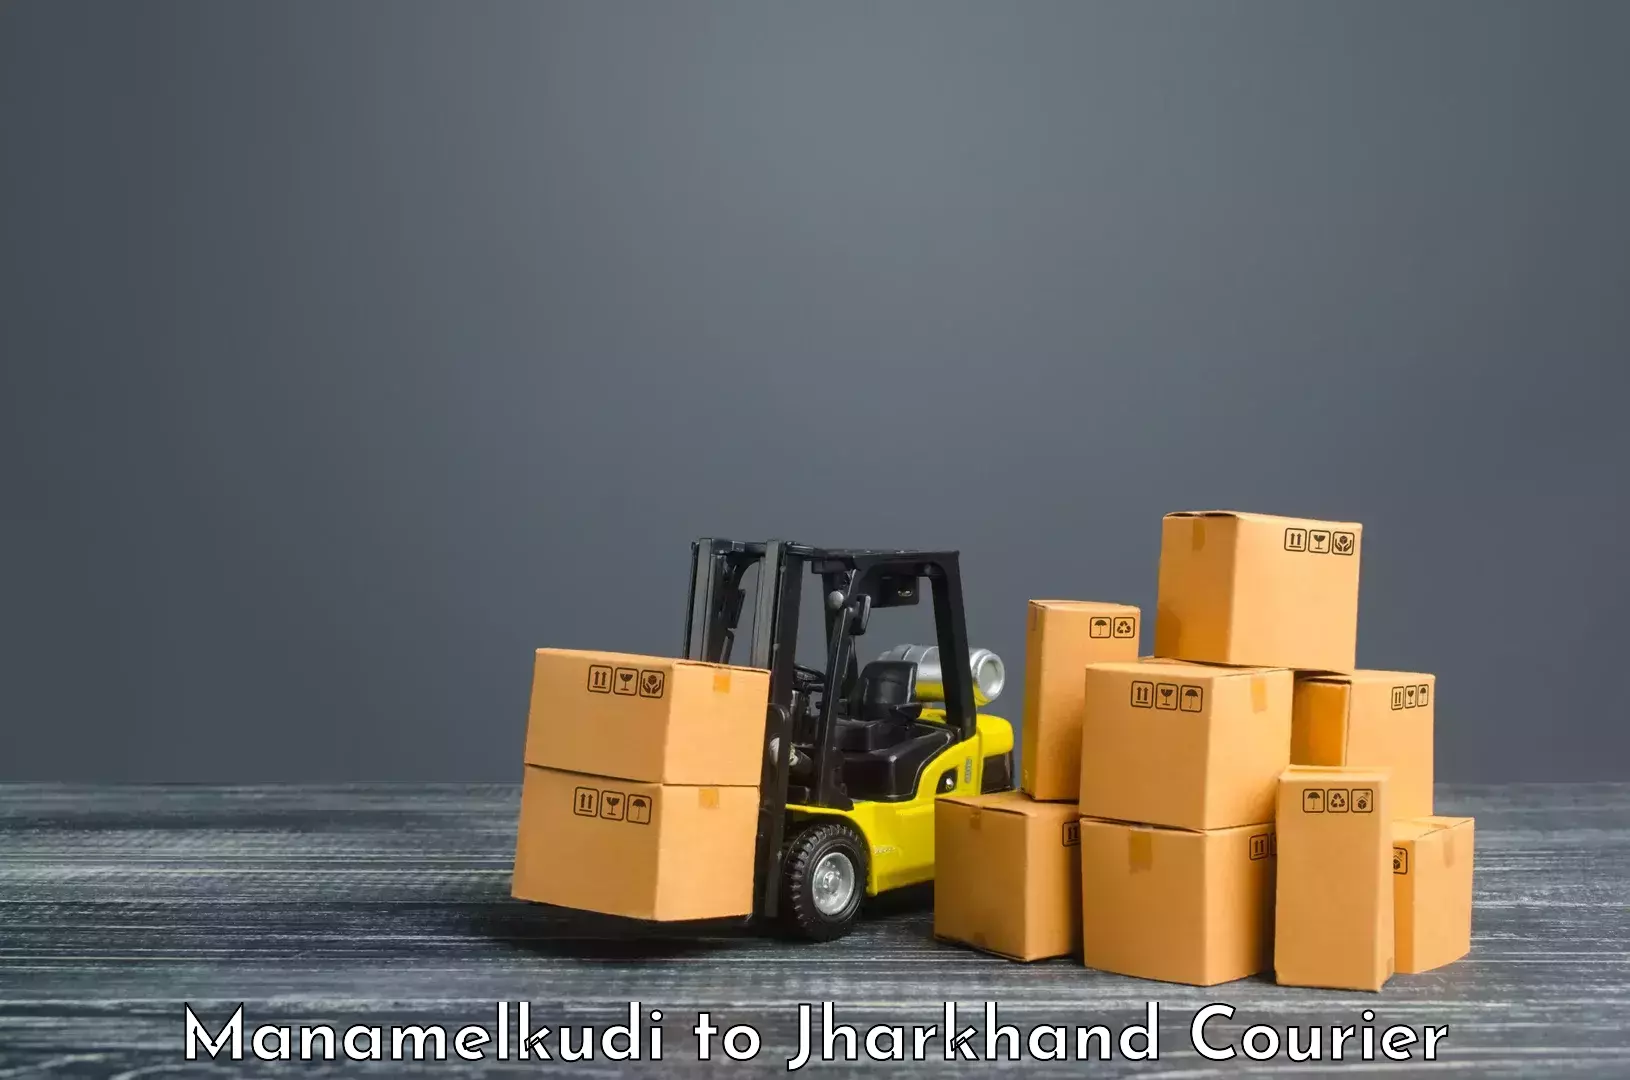 High-capacity courier solutions Manamelkudi to Doranda